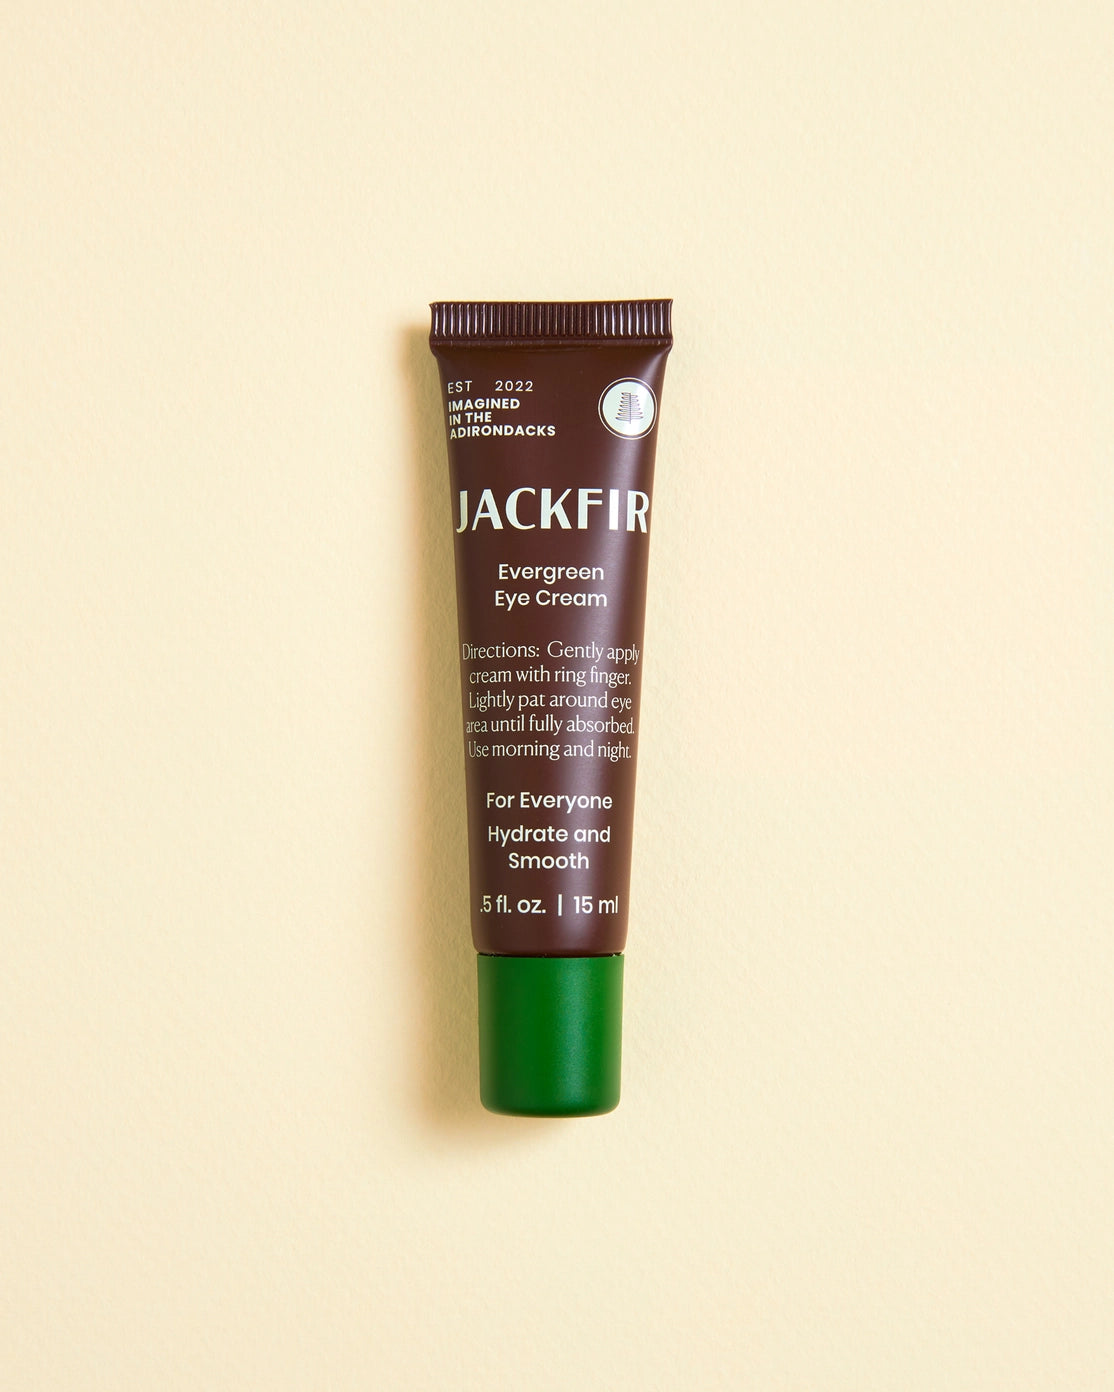 Jackfir The Evergreen Eye Cream